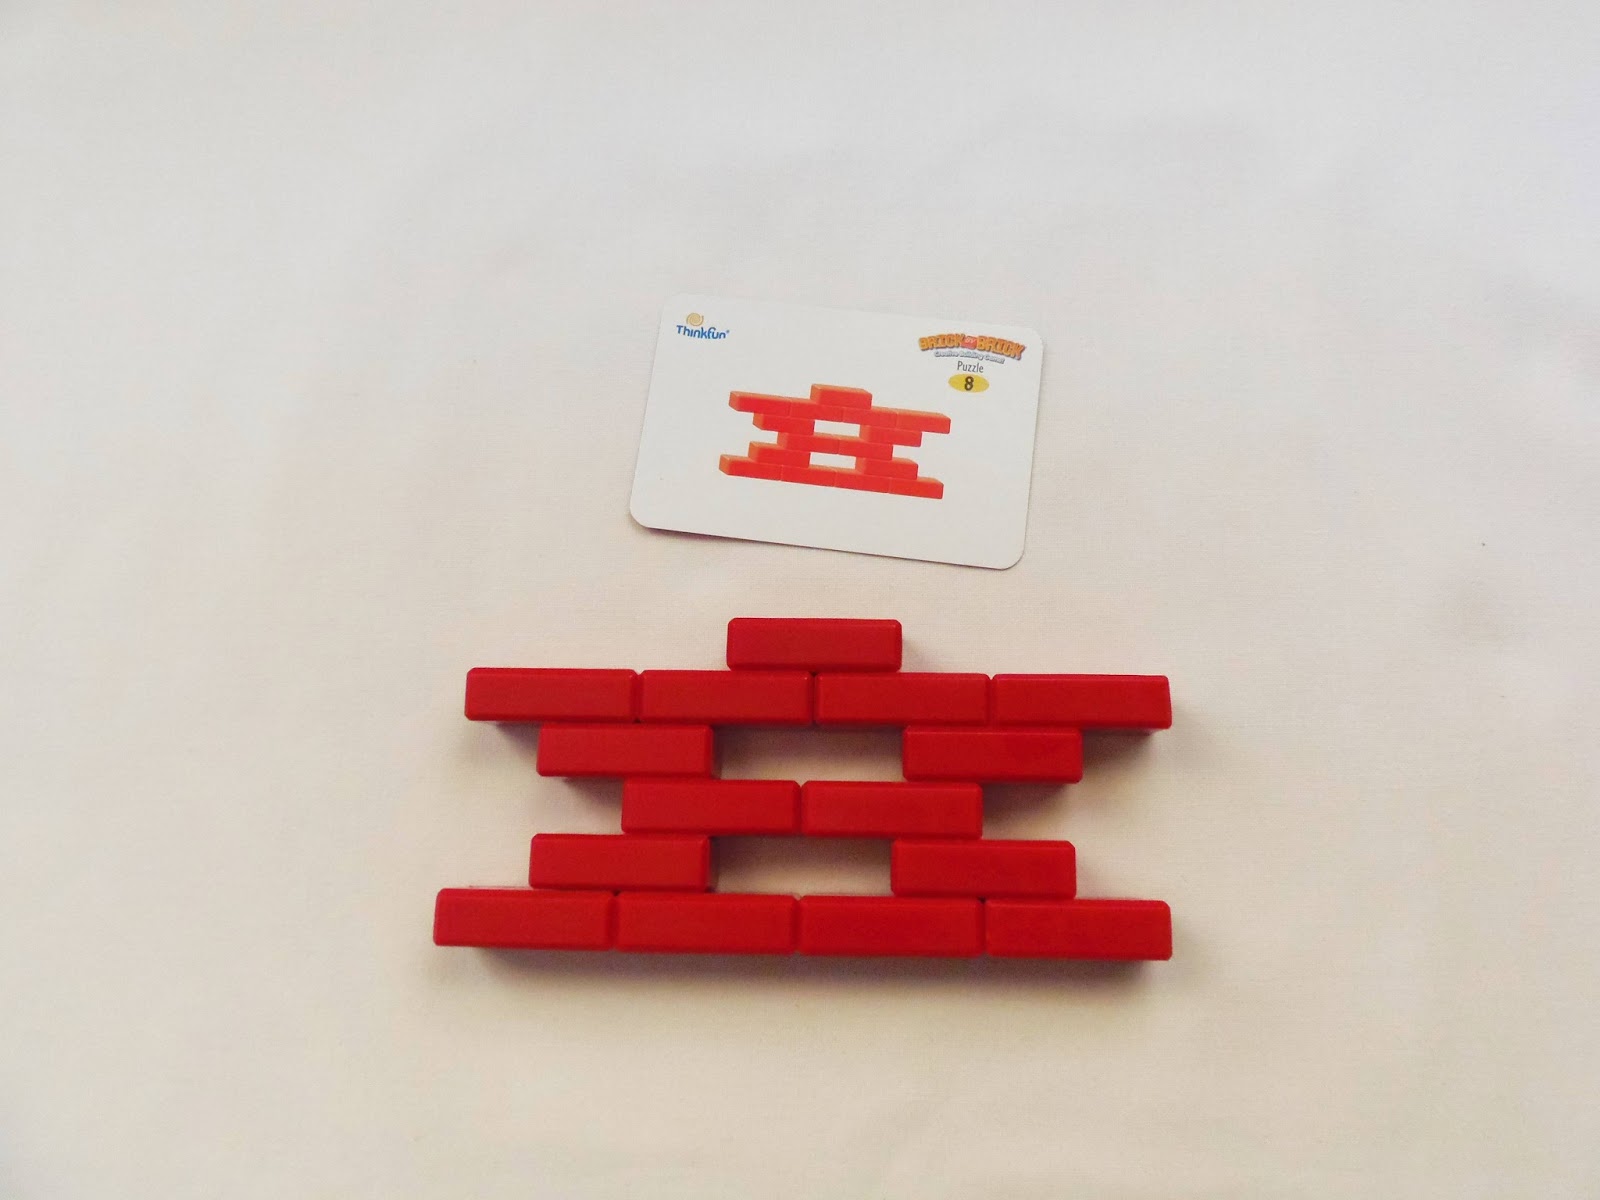 ThinkFun Brick by Brick Puzzle